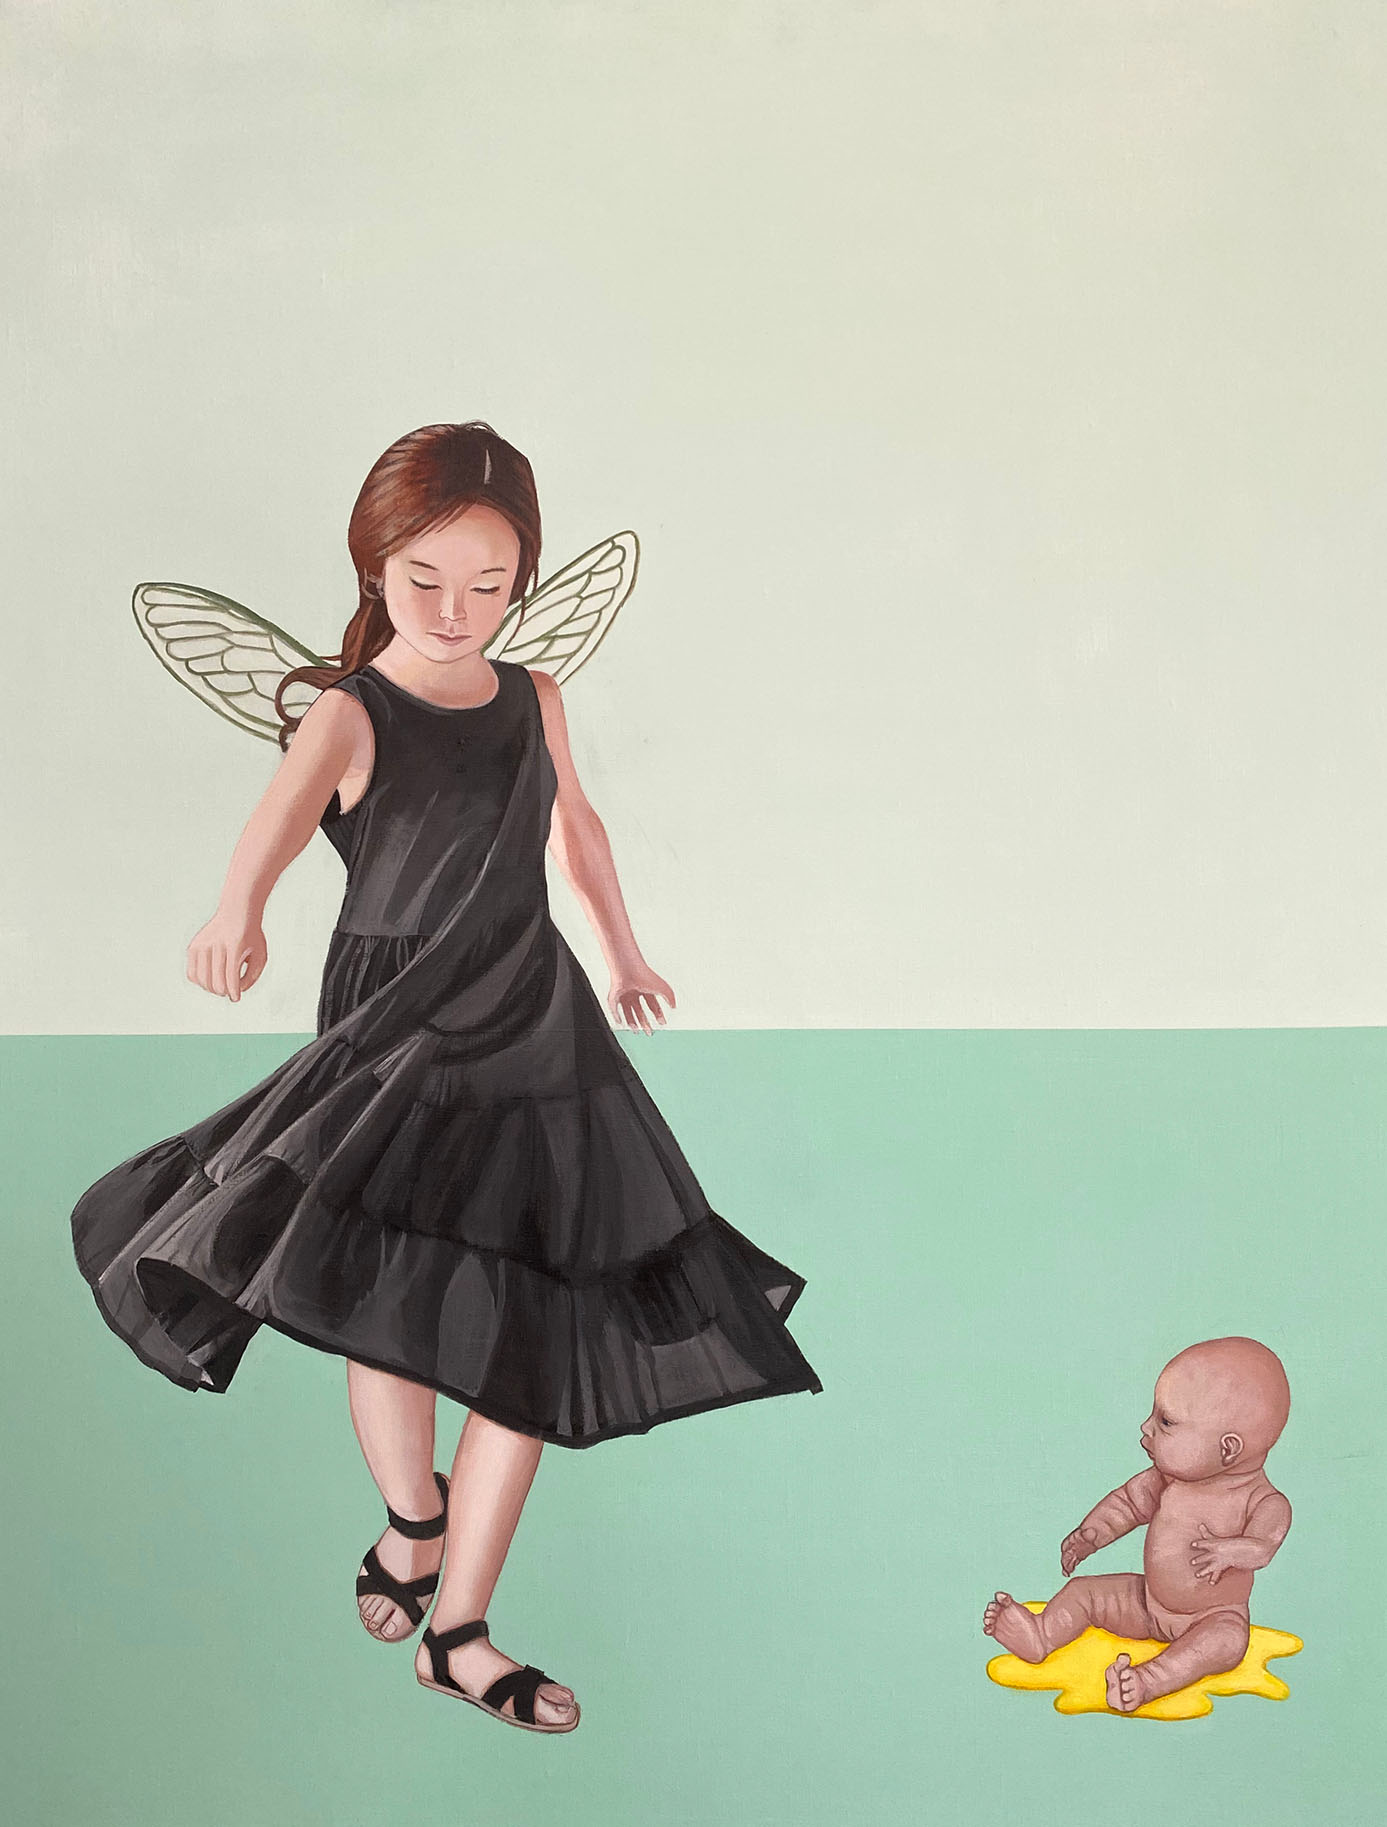 Cristina Ruiz Guinazu, La danse, acrylics on canvas, 92 x 73 cm, 2017